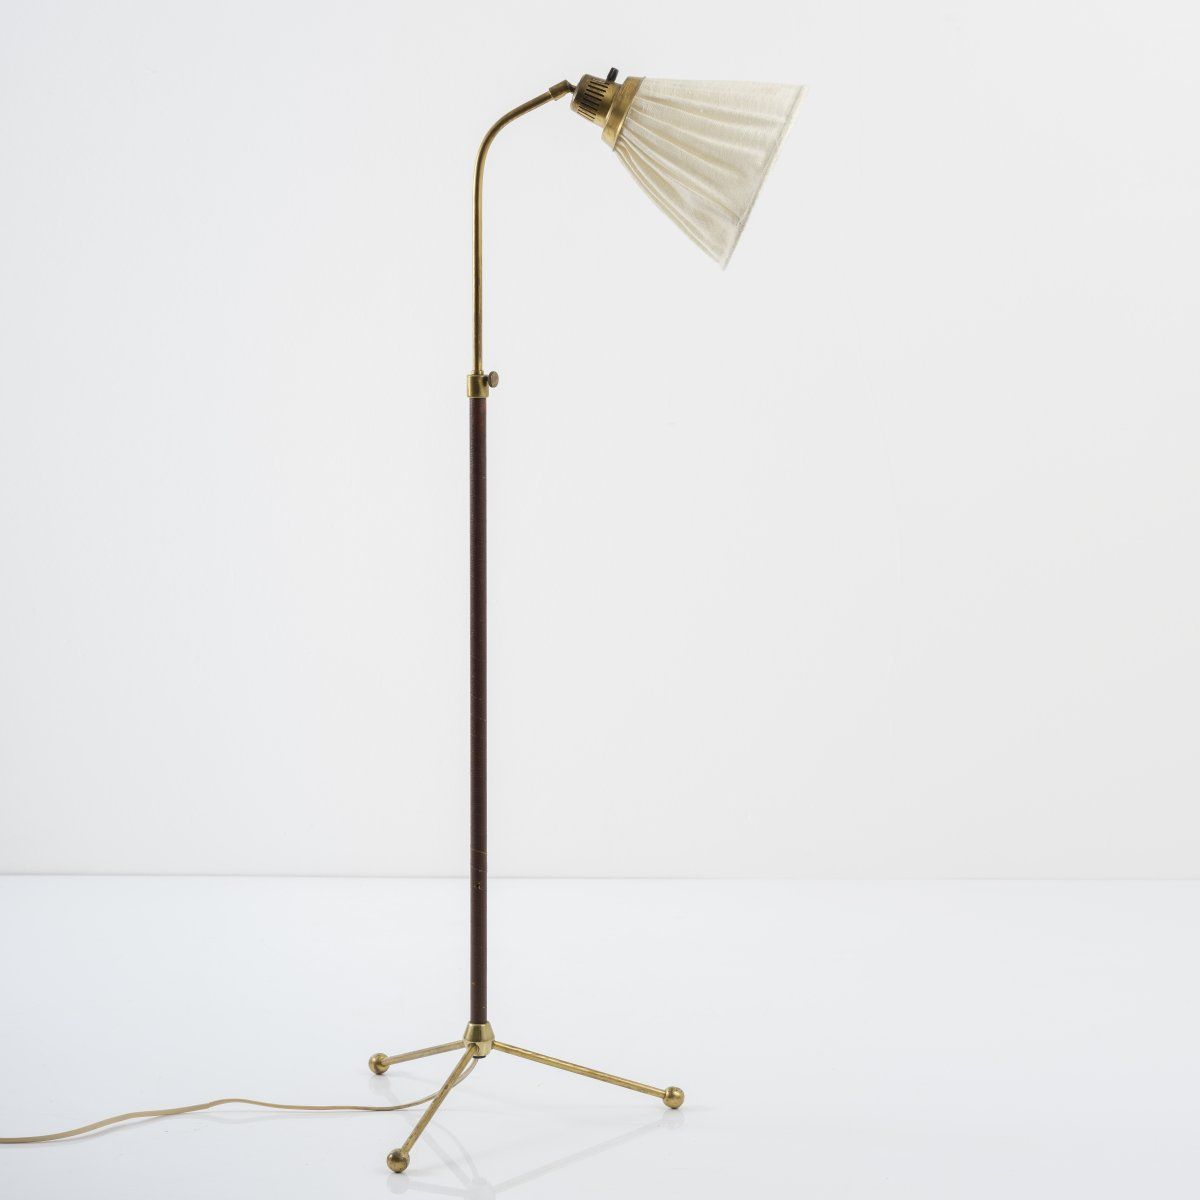 Null Hans Bergström, '545' floorlamp, 1940s, H. 120 - 153 cm, D. 22 cm. Made by &hellip;